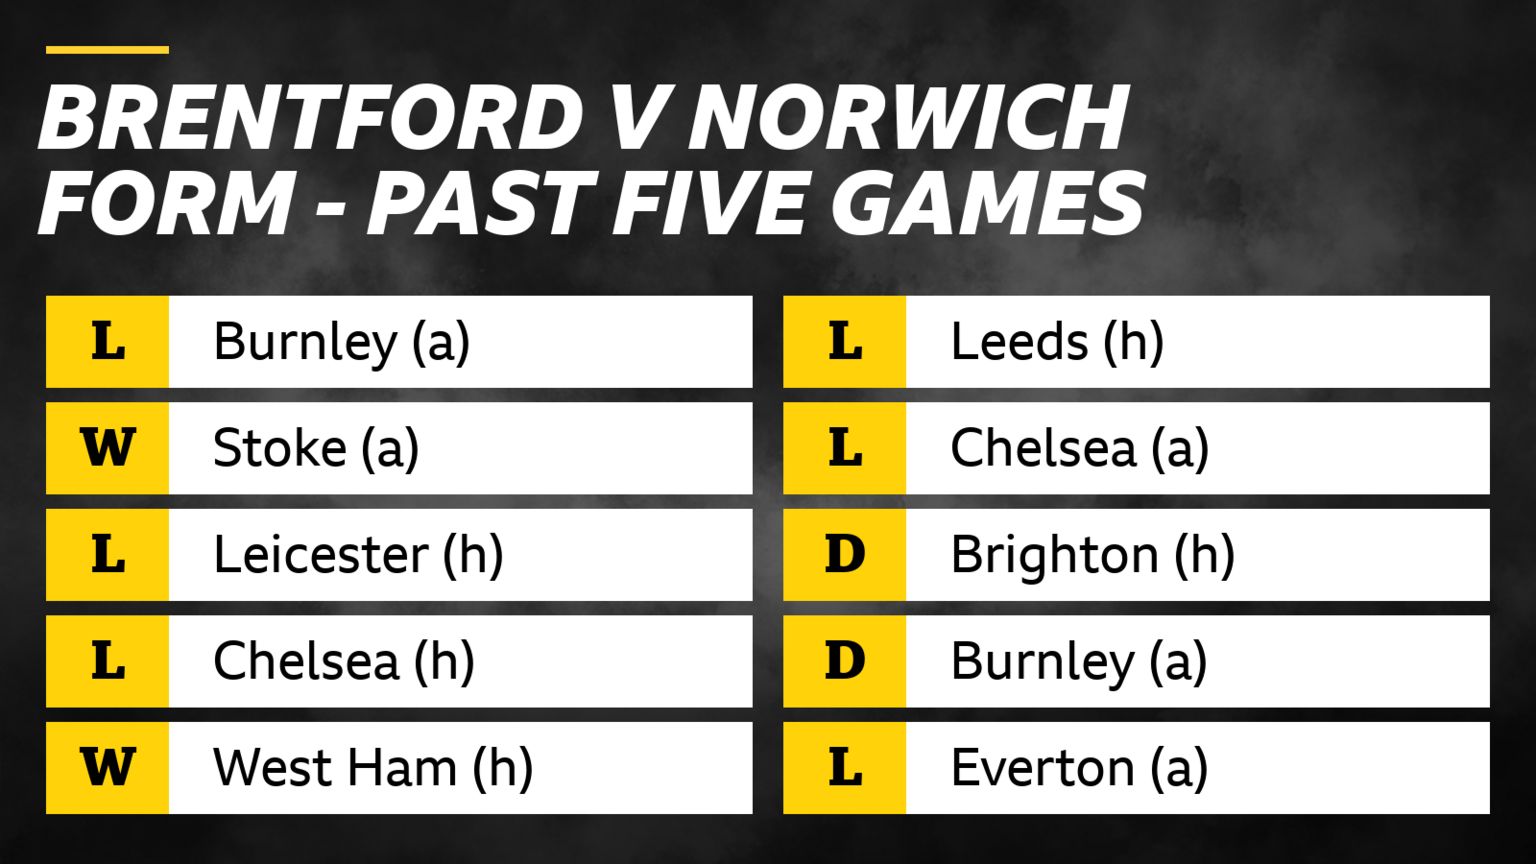 Brentford v Norwich form in past 5 games: Brentford - loss v Burnley, win v Stoke, losses v Leicester and Chelsea, win v West Ham. Norwich - losses v Leeds and Chelsea, draws v Brighton and Burnley, loss v Everton